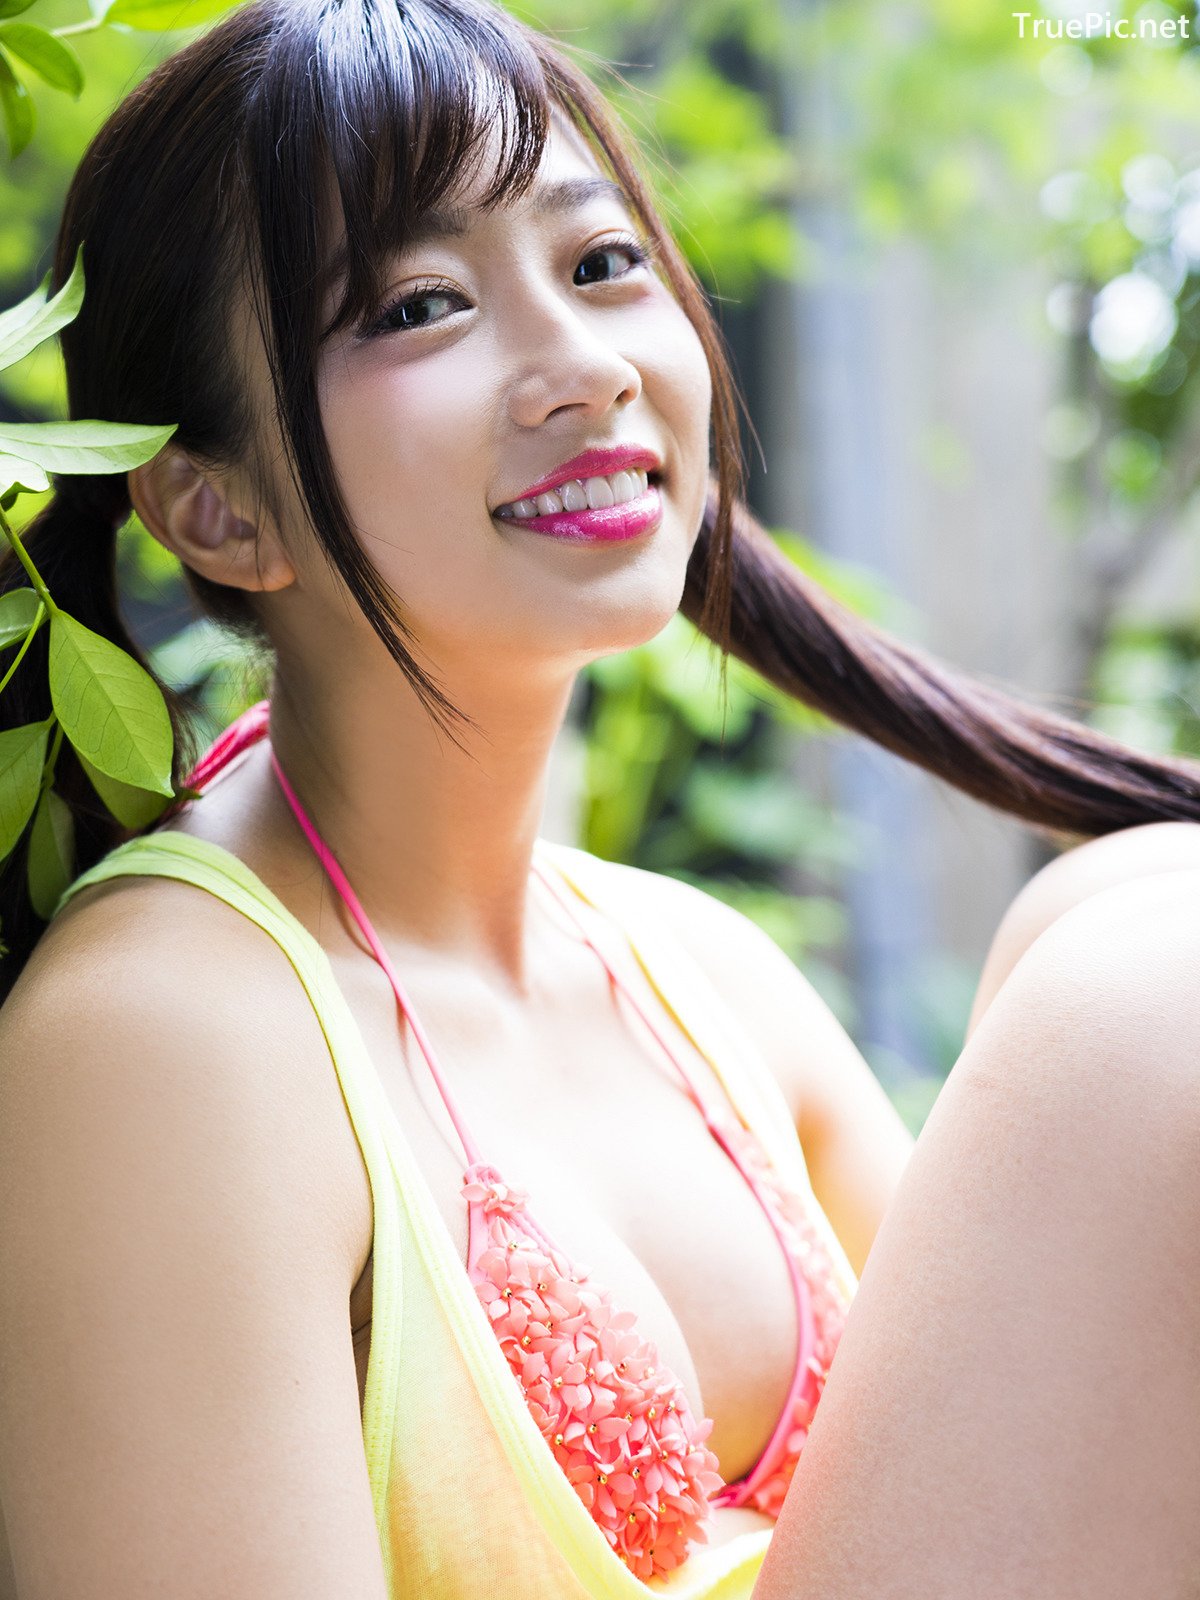 Image Japanese Gravure Model - Sayaka Ohnuki - Maiden Love Story - TruePic.net - Picture-3